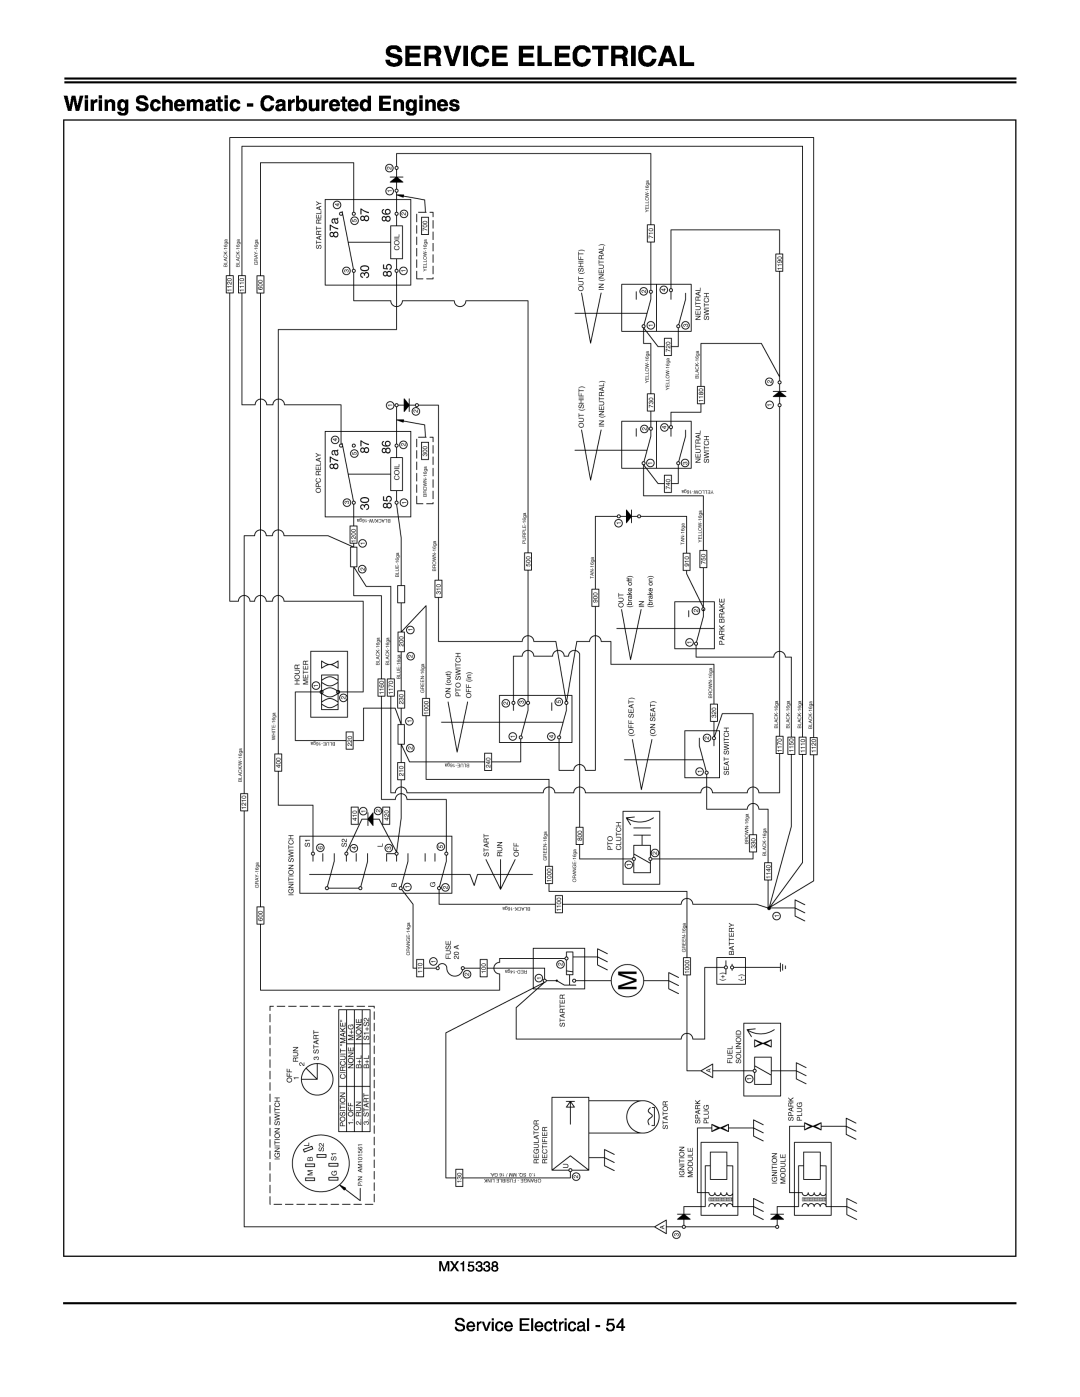 Great Dane GDRZ61-25KHE, GDRZ72-27KHE, GDRZ61-25KAE manual Wiring Schematic - Carbureted Engines, Service Electrical, MX15338 